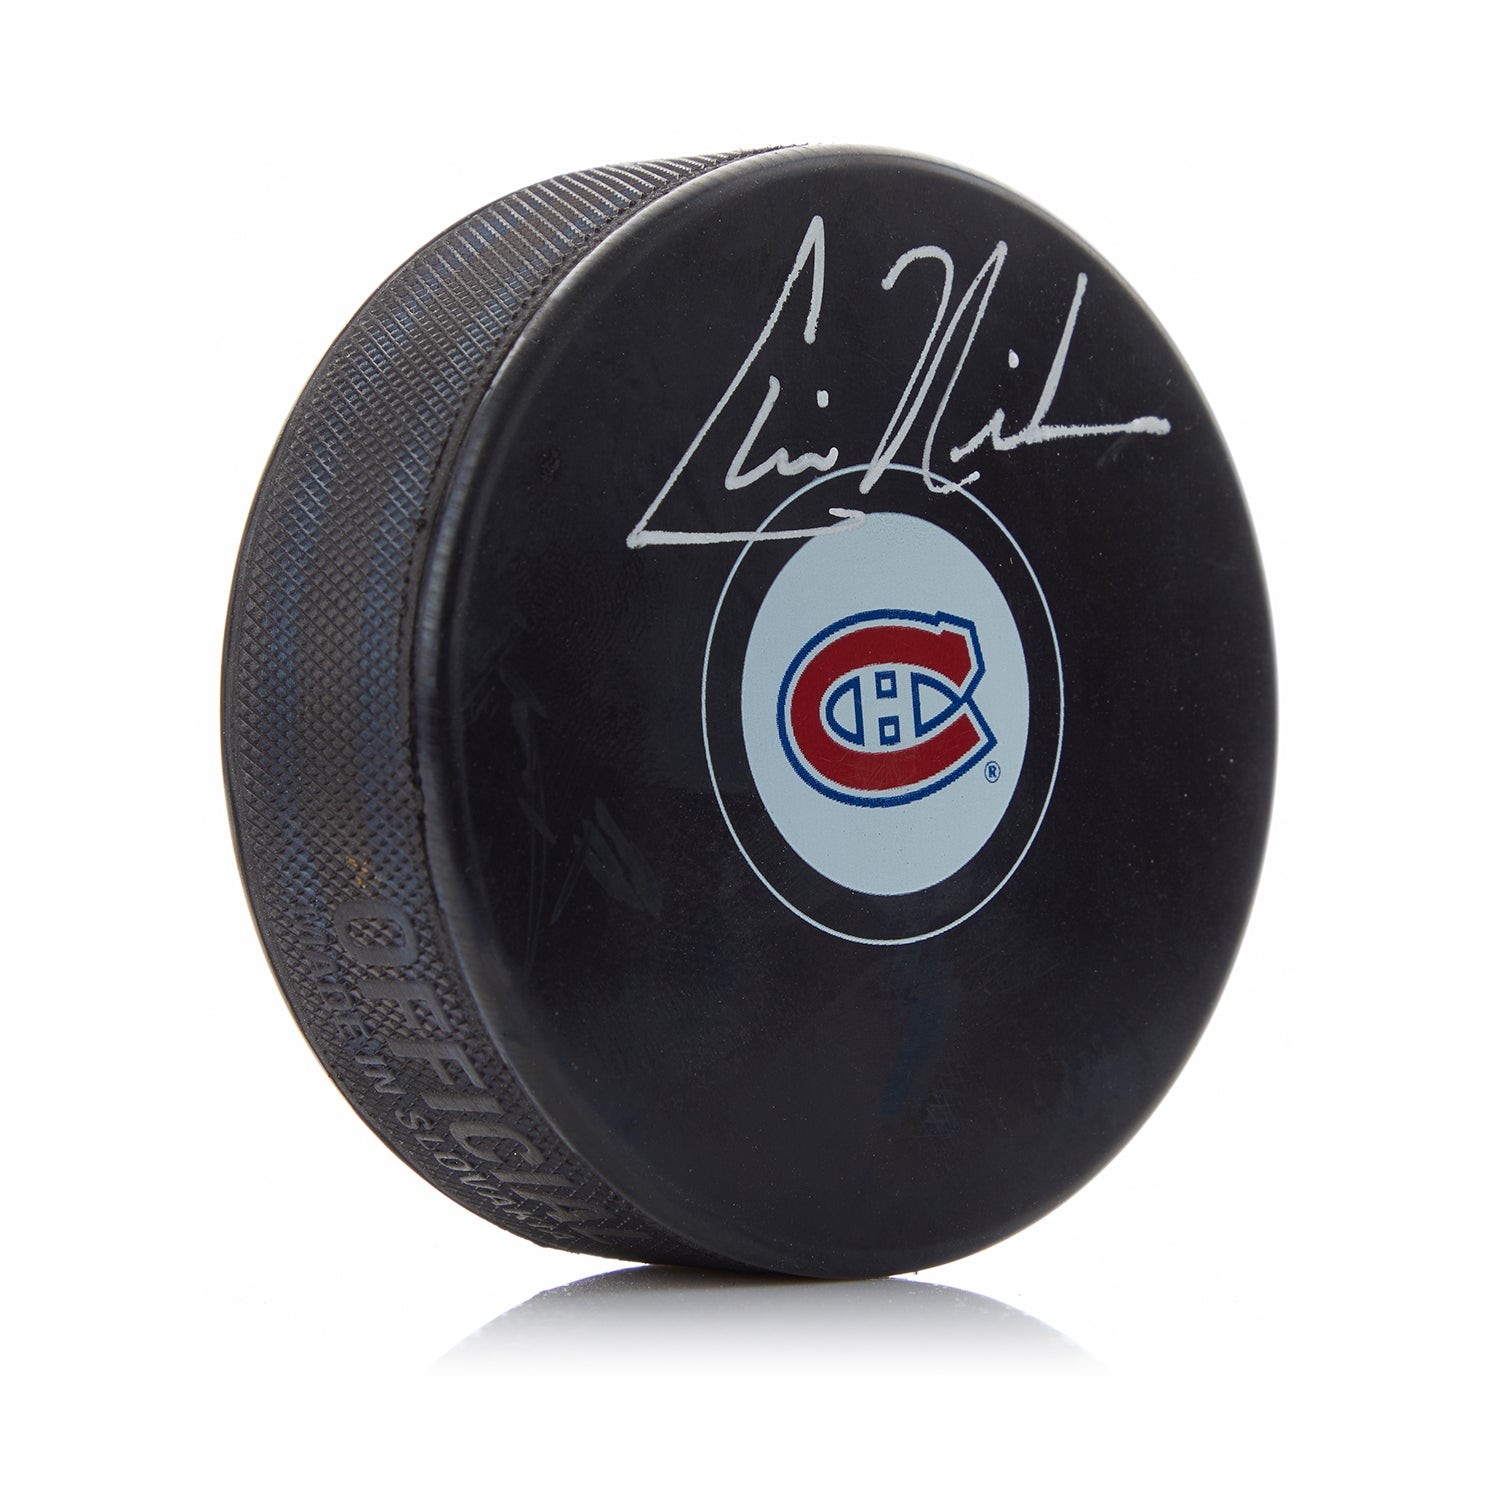 Chris Nilan Autographed Montreal Canadiens Hockey Puck